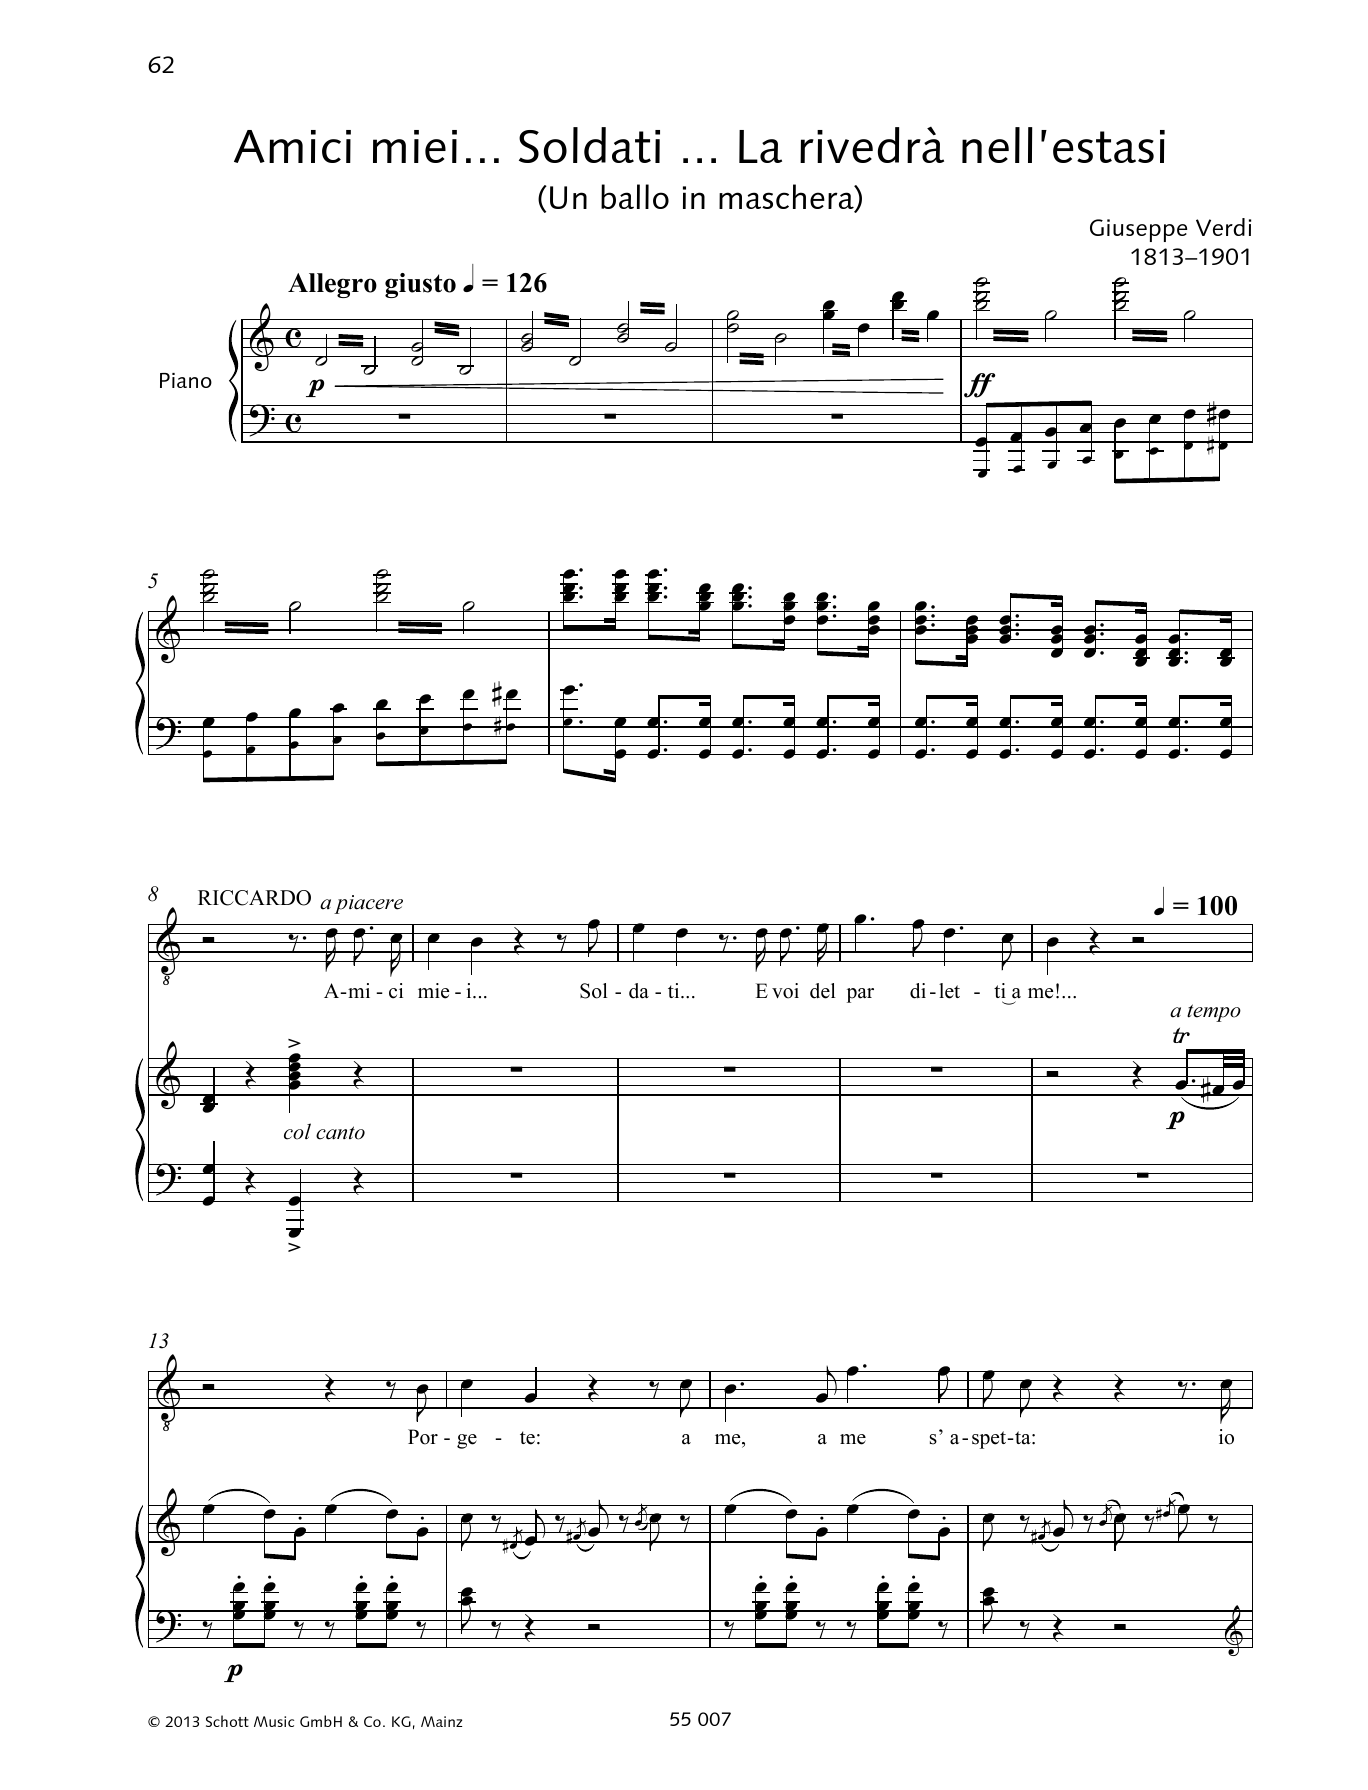 Giuseppe Verdi Amici miei ... Soldati ... La rivedra nell'estasi sheet music notes and chords arranged for Piano & Vocal